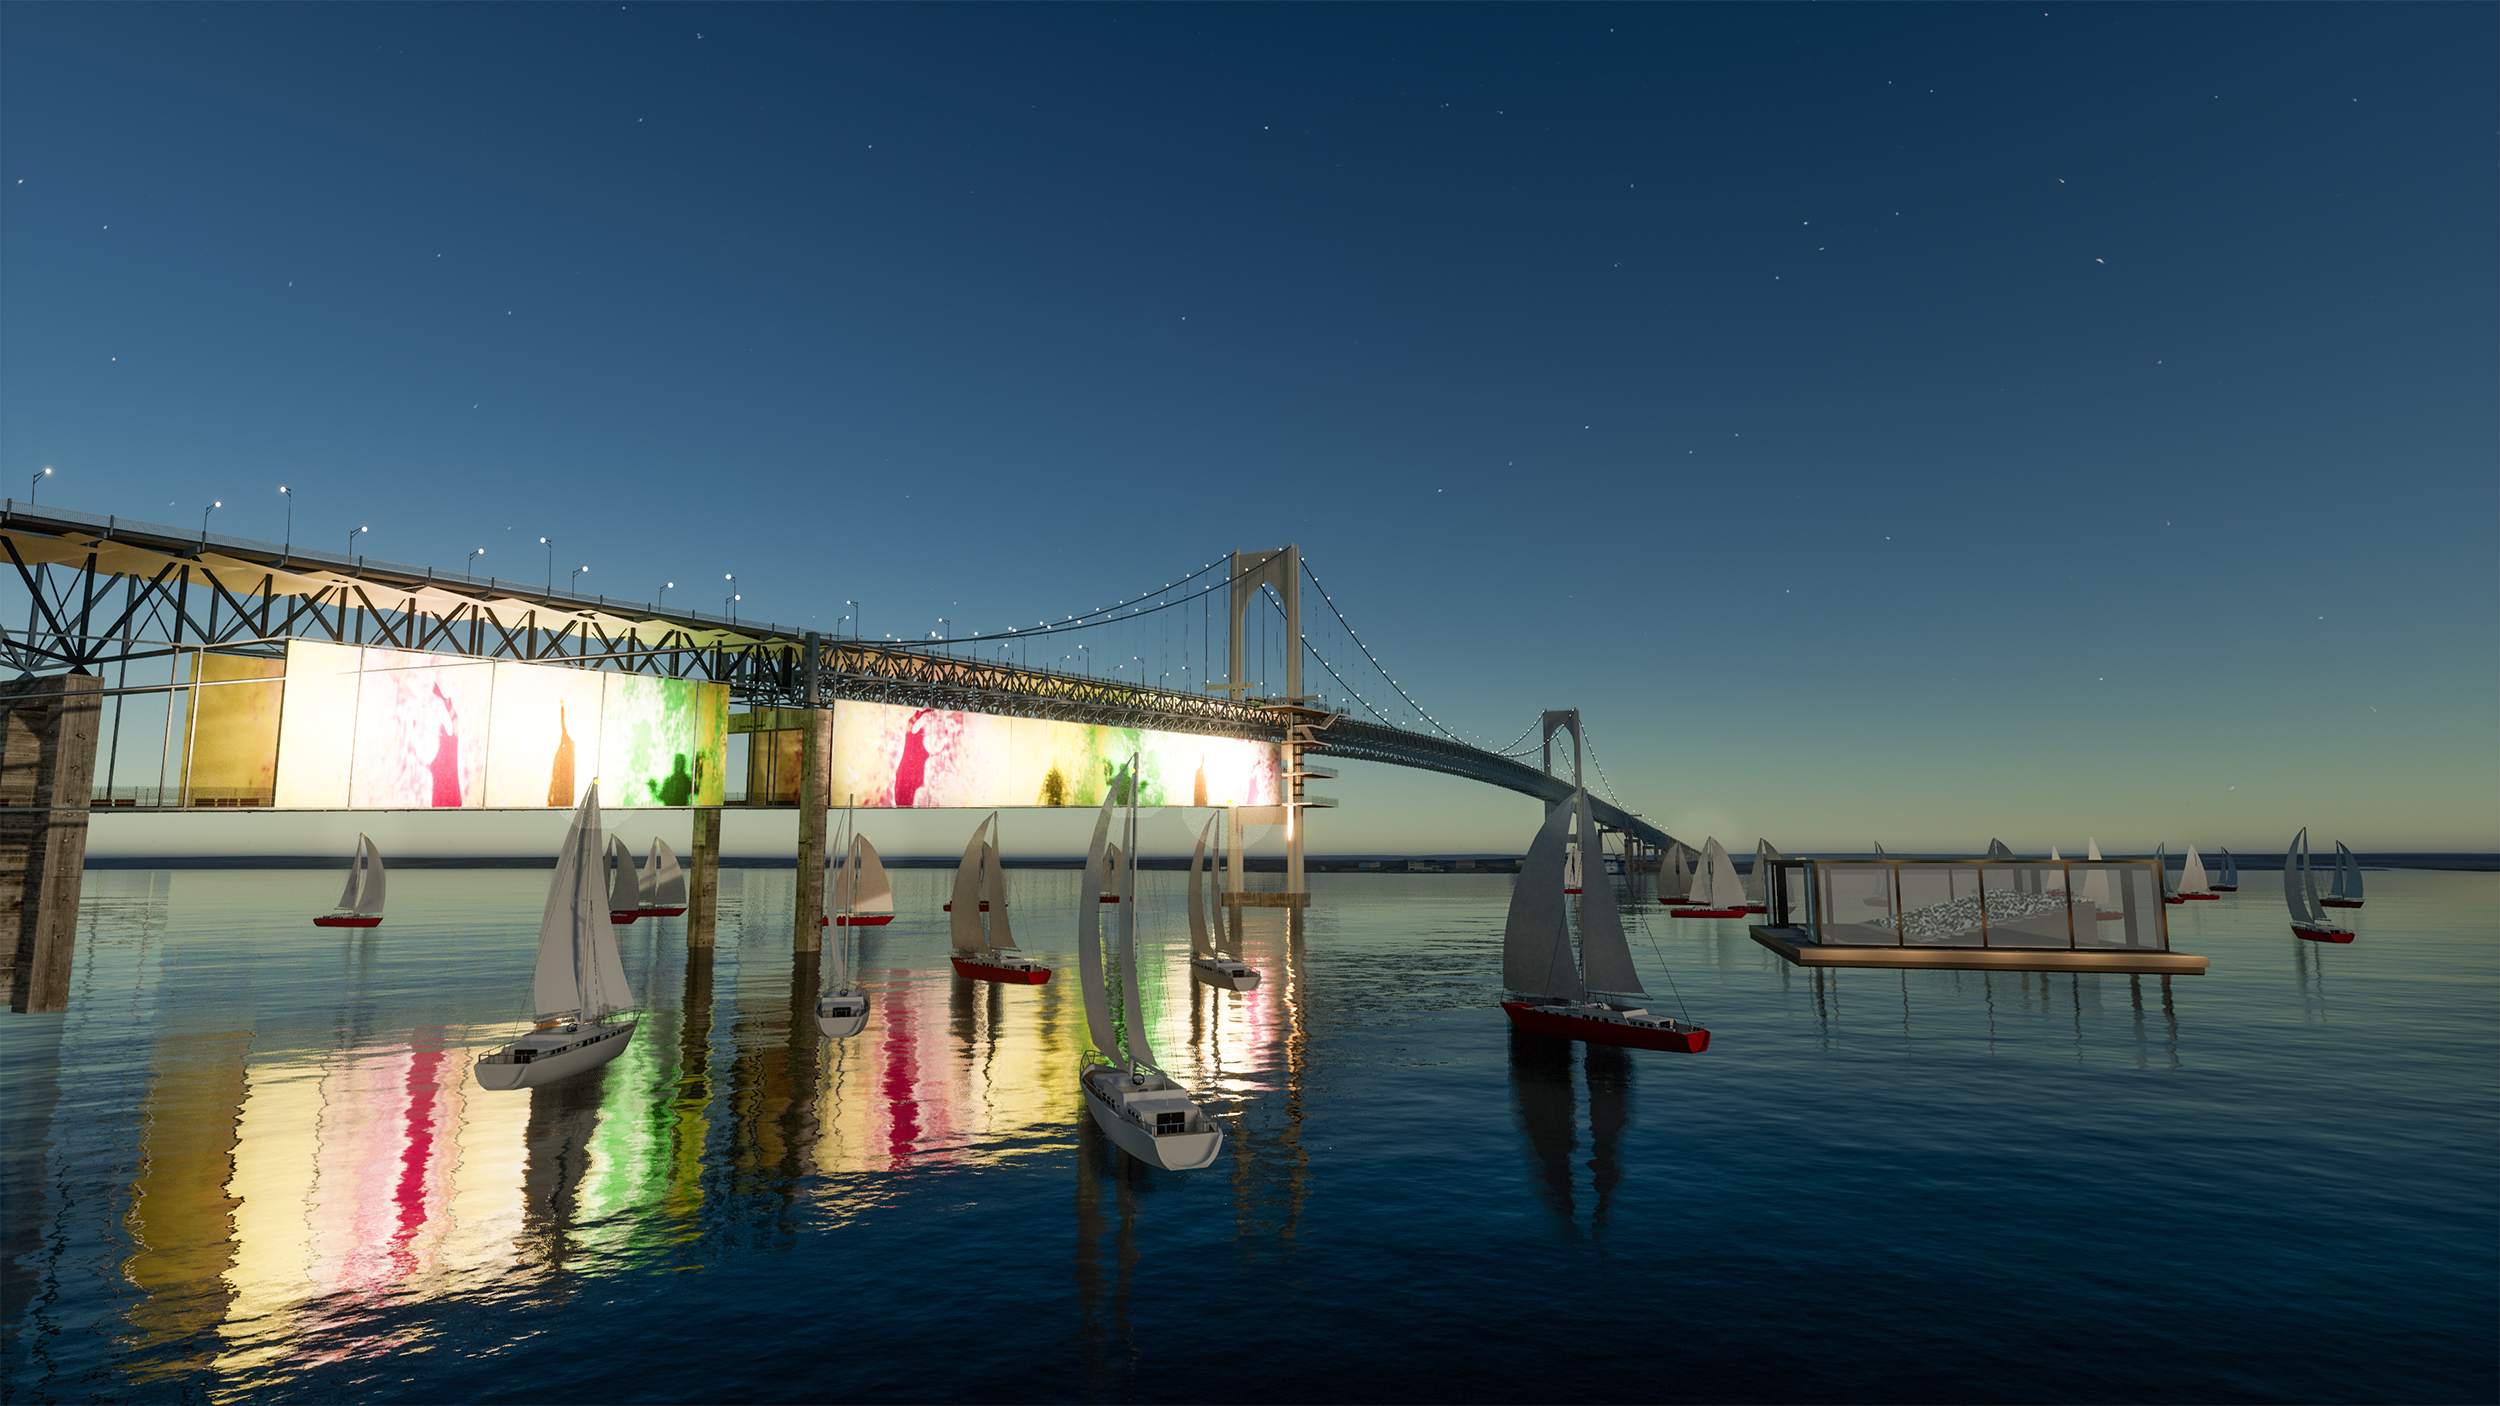 rendering of the bridge with huge screens facing water